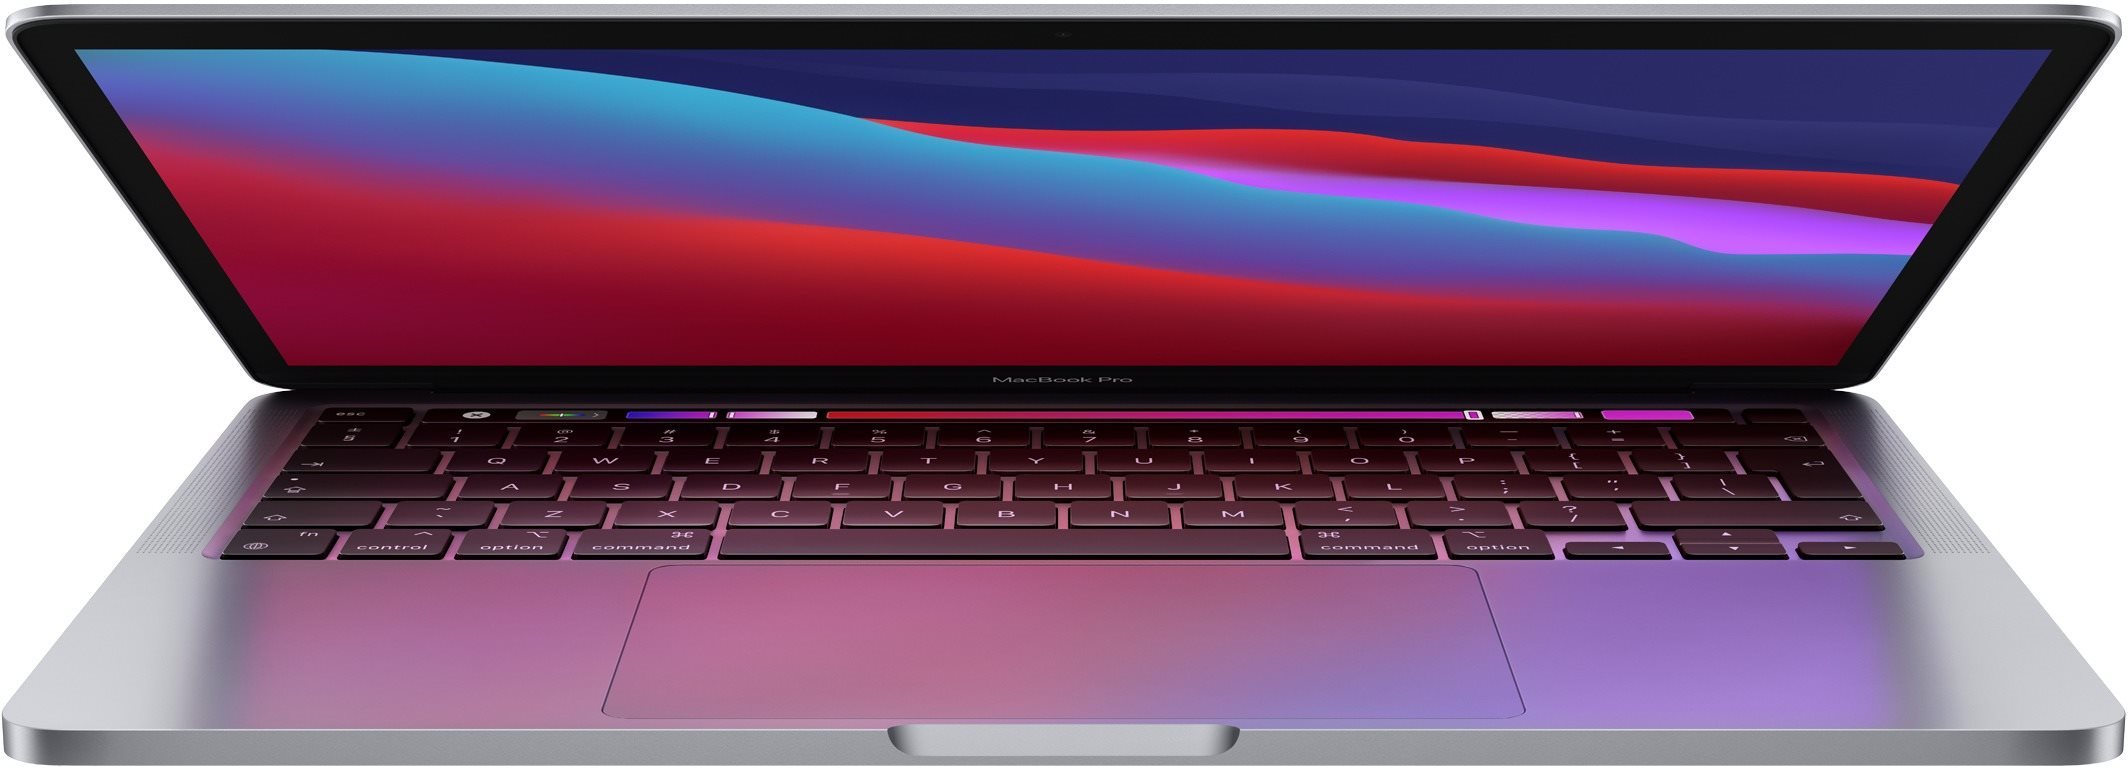 Macbook Pro (2020) je designový skvost